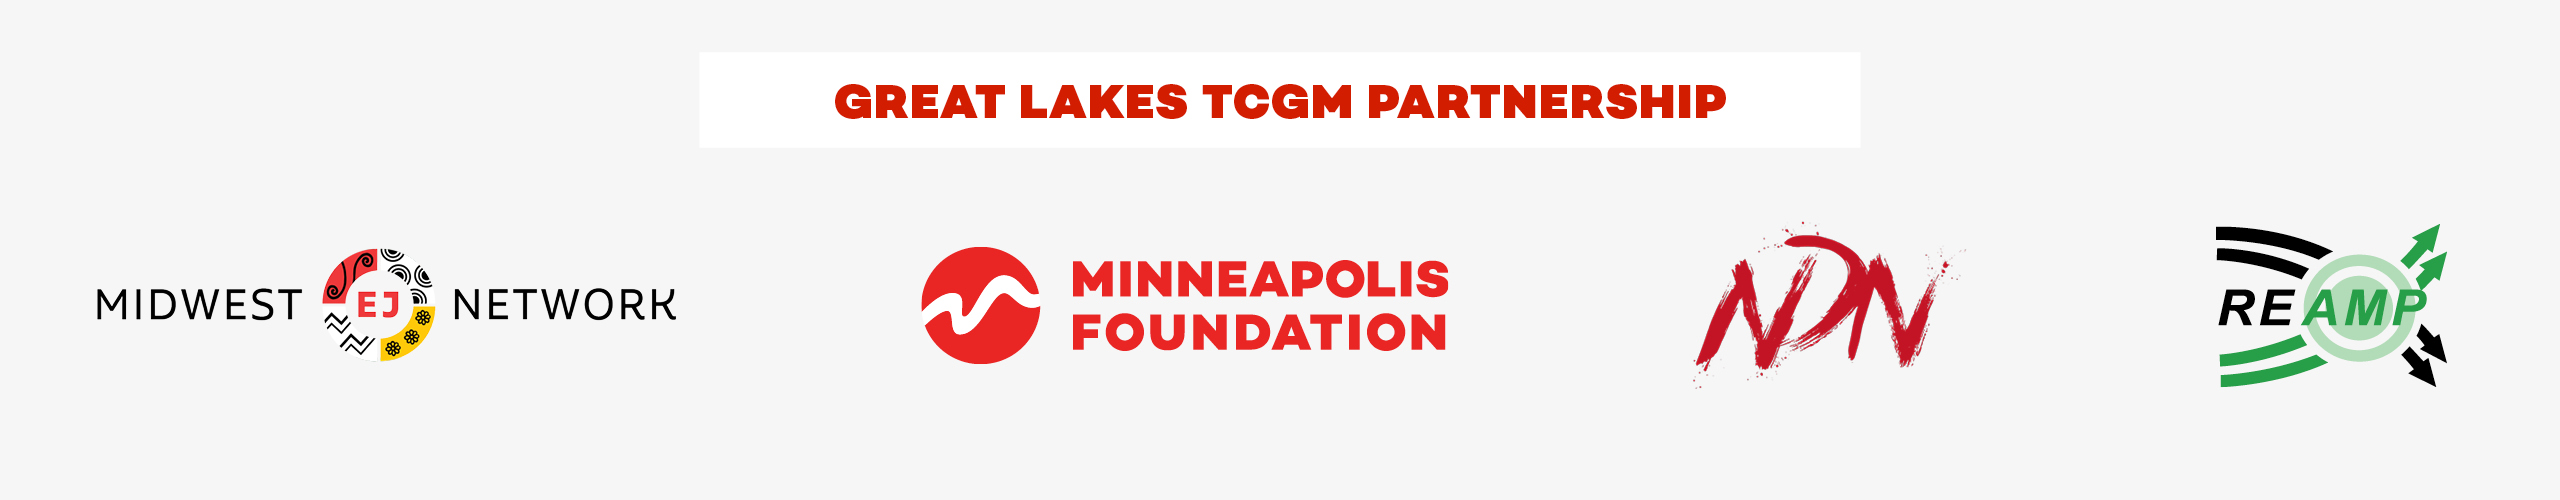 Great Lakes TCGM Partnership logos